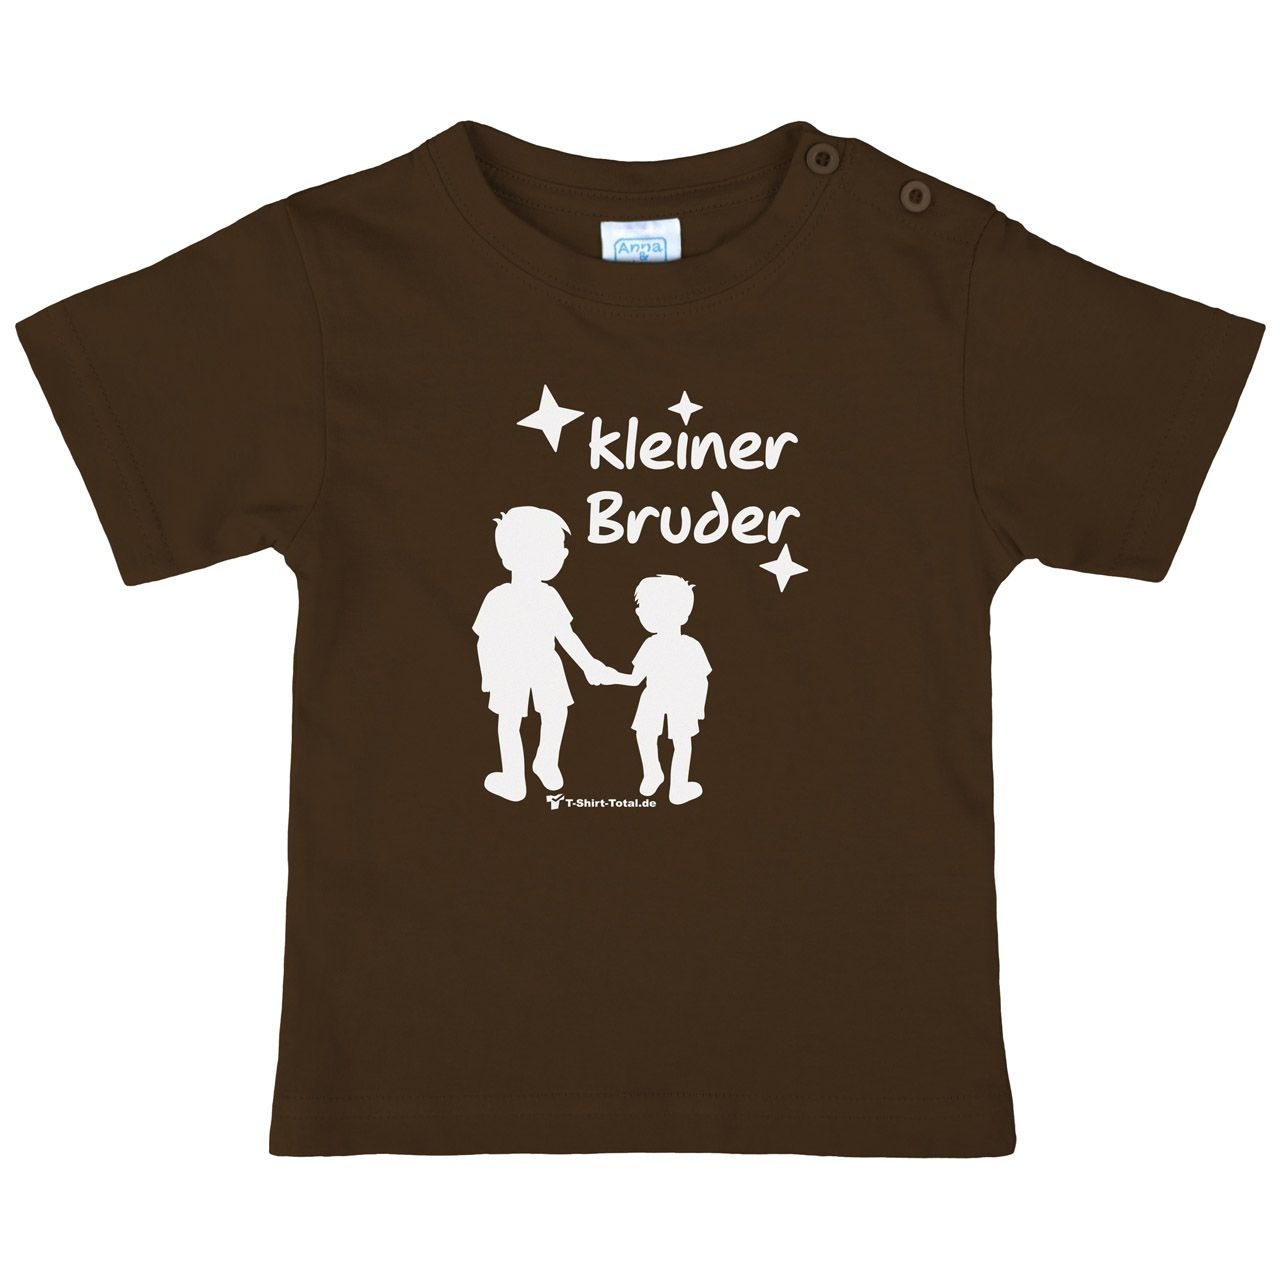 Kleiner Bruder JJ Kinder T-Shirt braun 68 / 74